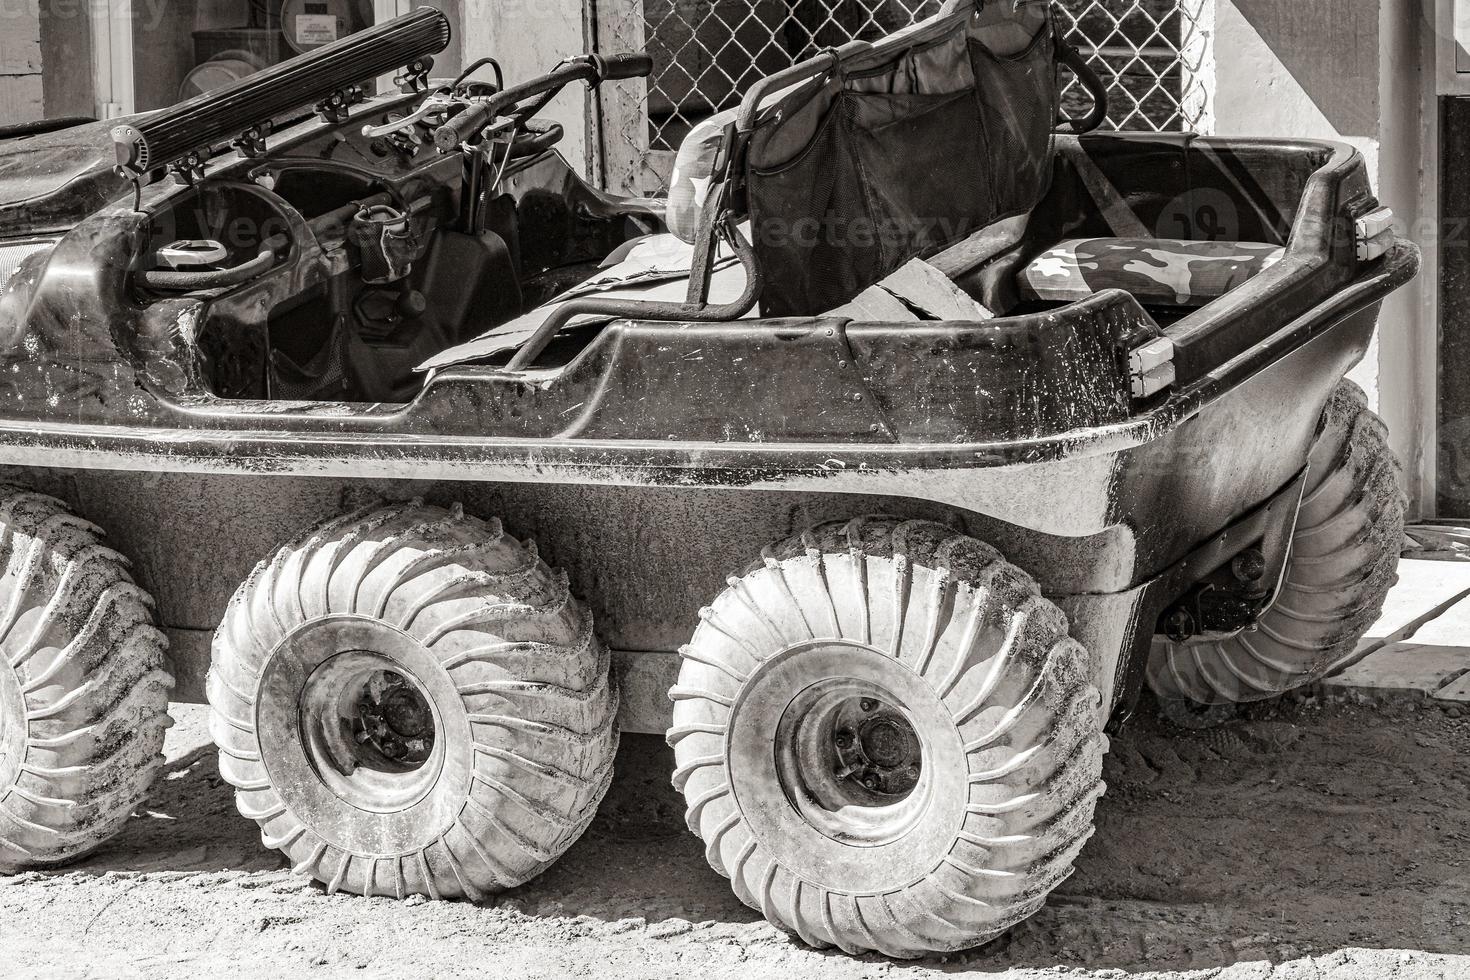 carrello da golf buggy 6 ruote muddy street village holbox mexico. foto